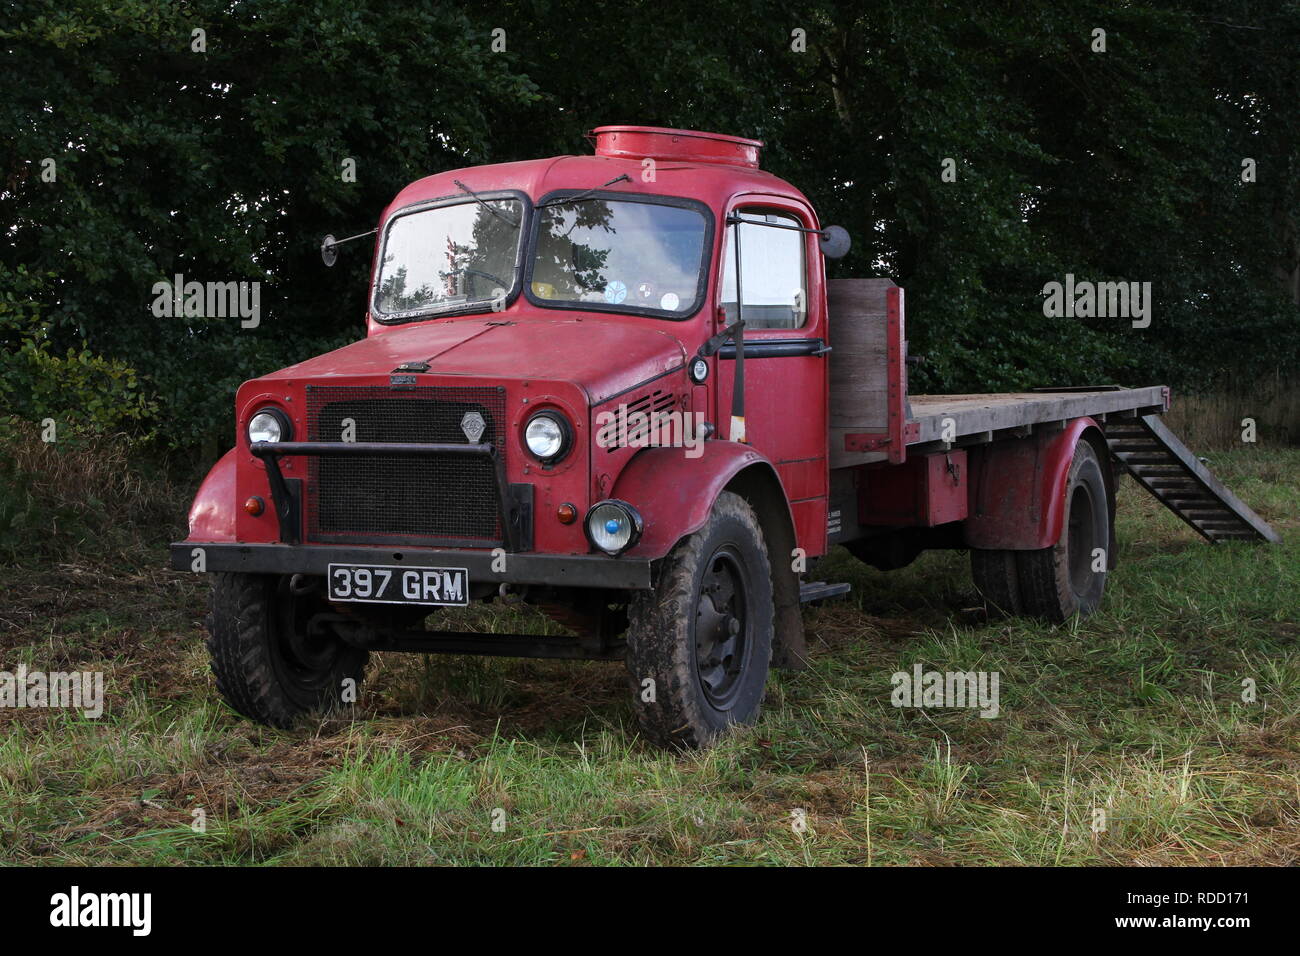 Bedford WD trattore- reg n.: 397 GRM Foto Stock